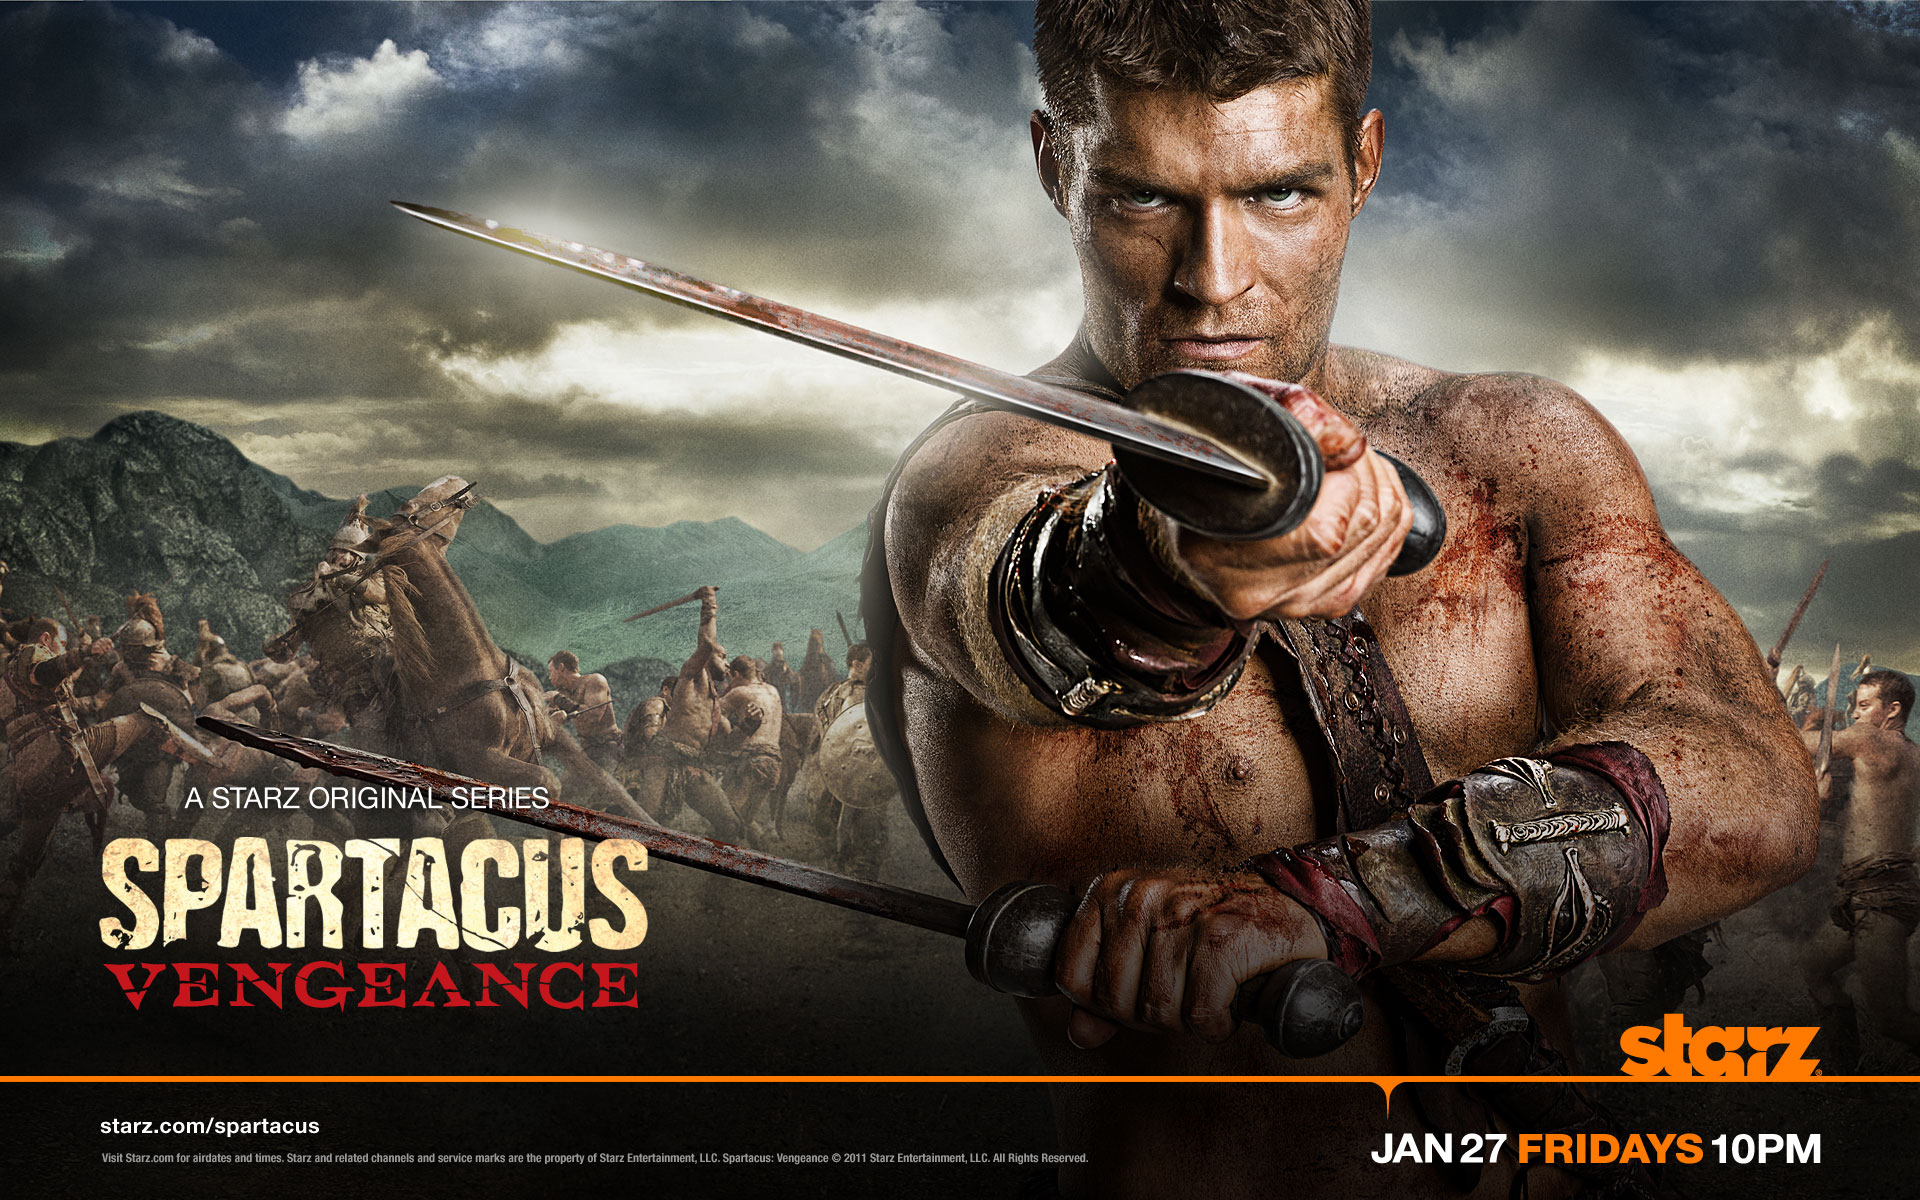 spartacus blood and sand full movie download utorrent